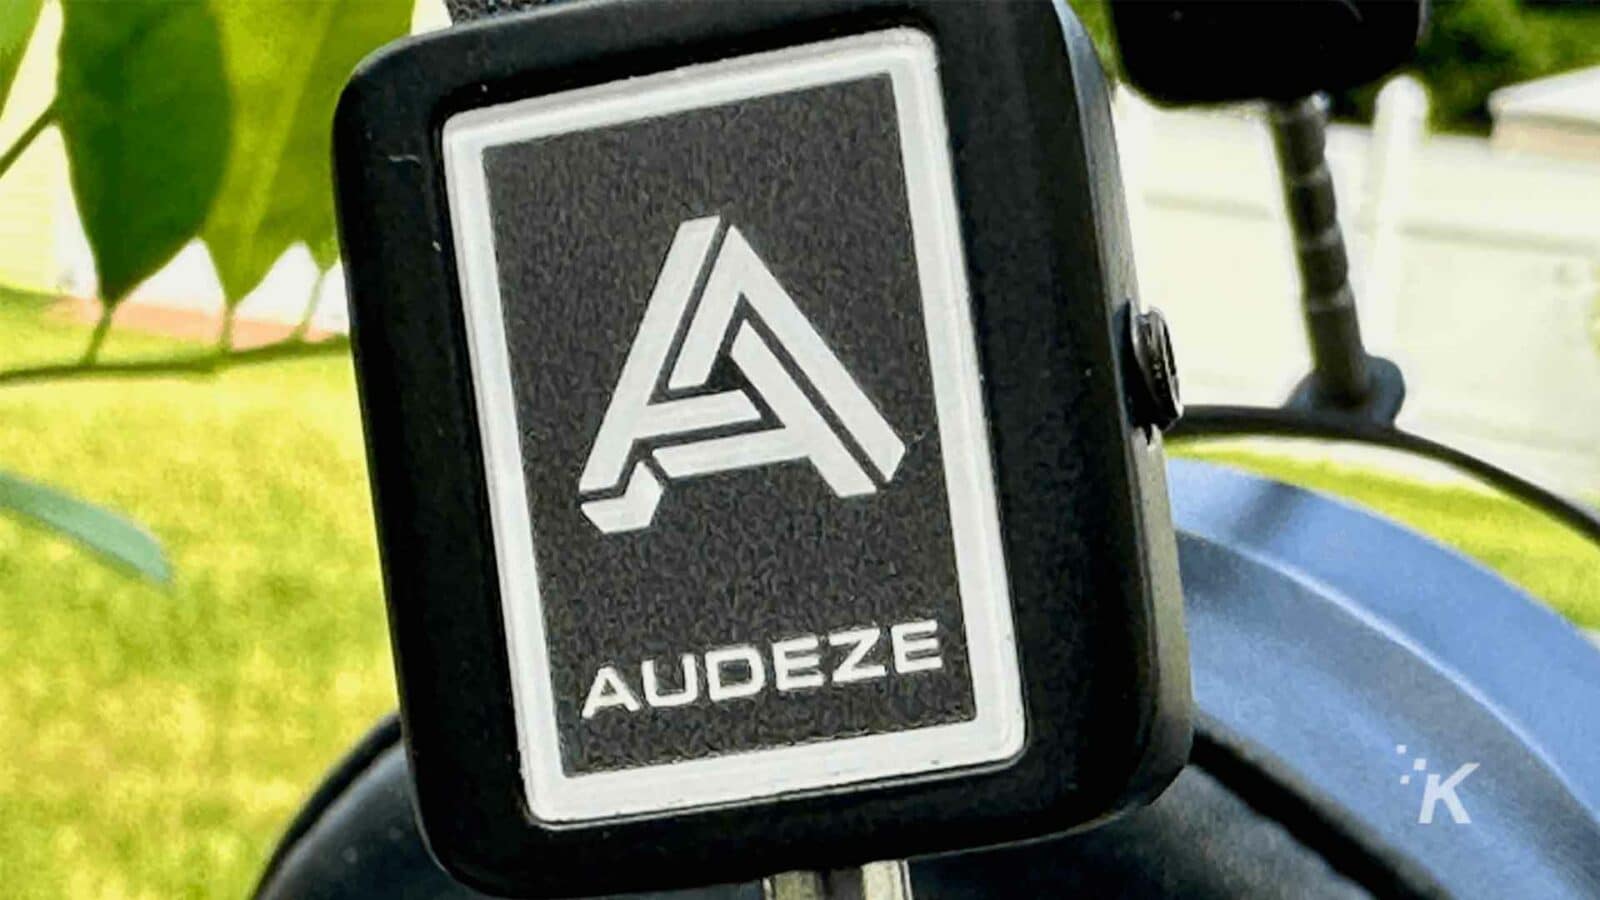 Close-up of the Audeza logo.